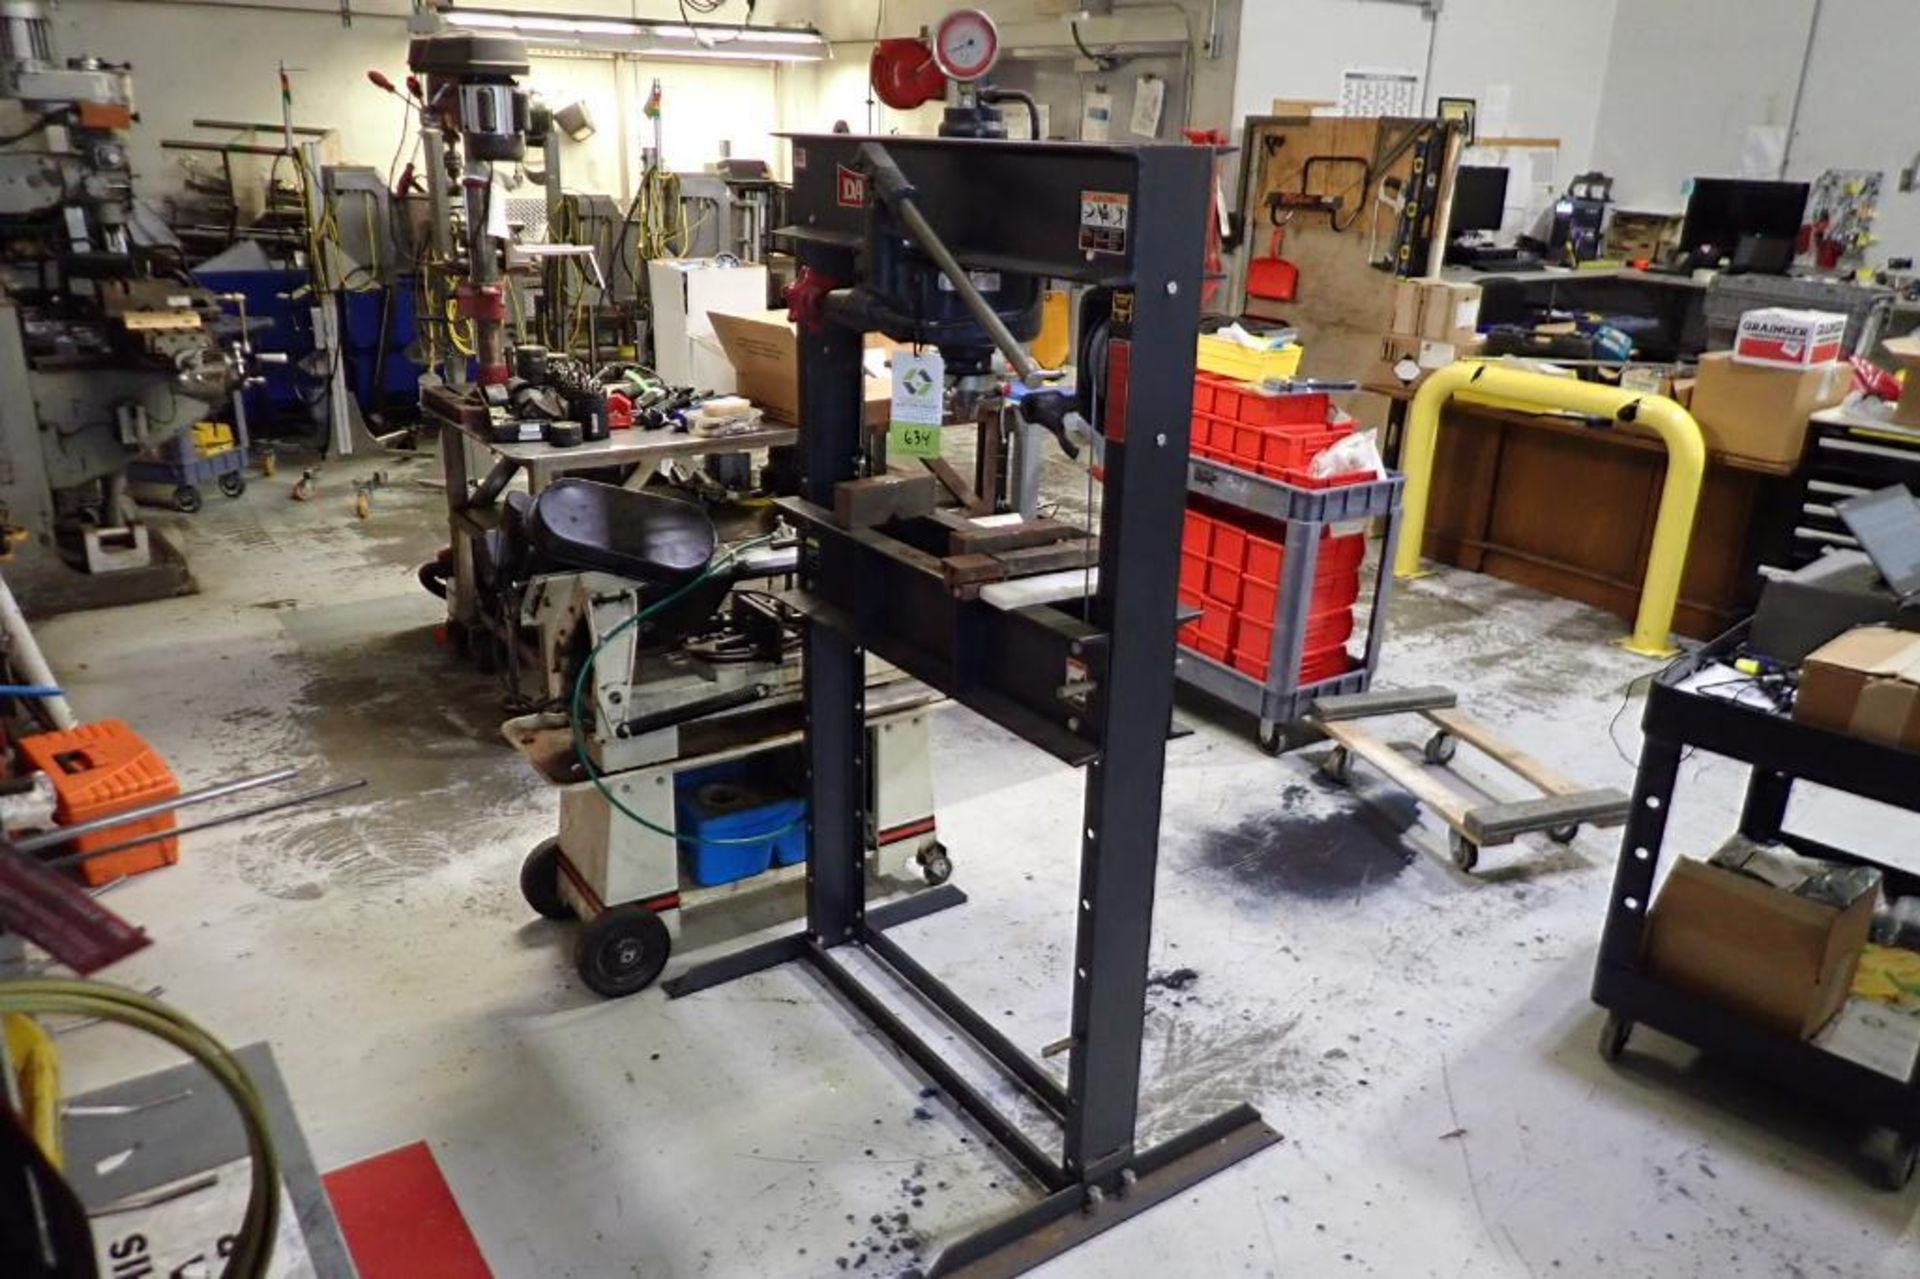 Dake hydraulic hand press, Model 907001, SN 1336394, made in the USA - ** Rigging Fee: $ 75 **